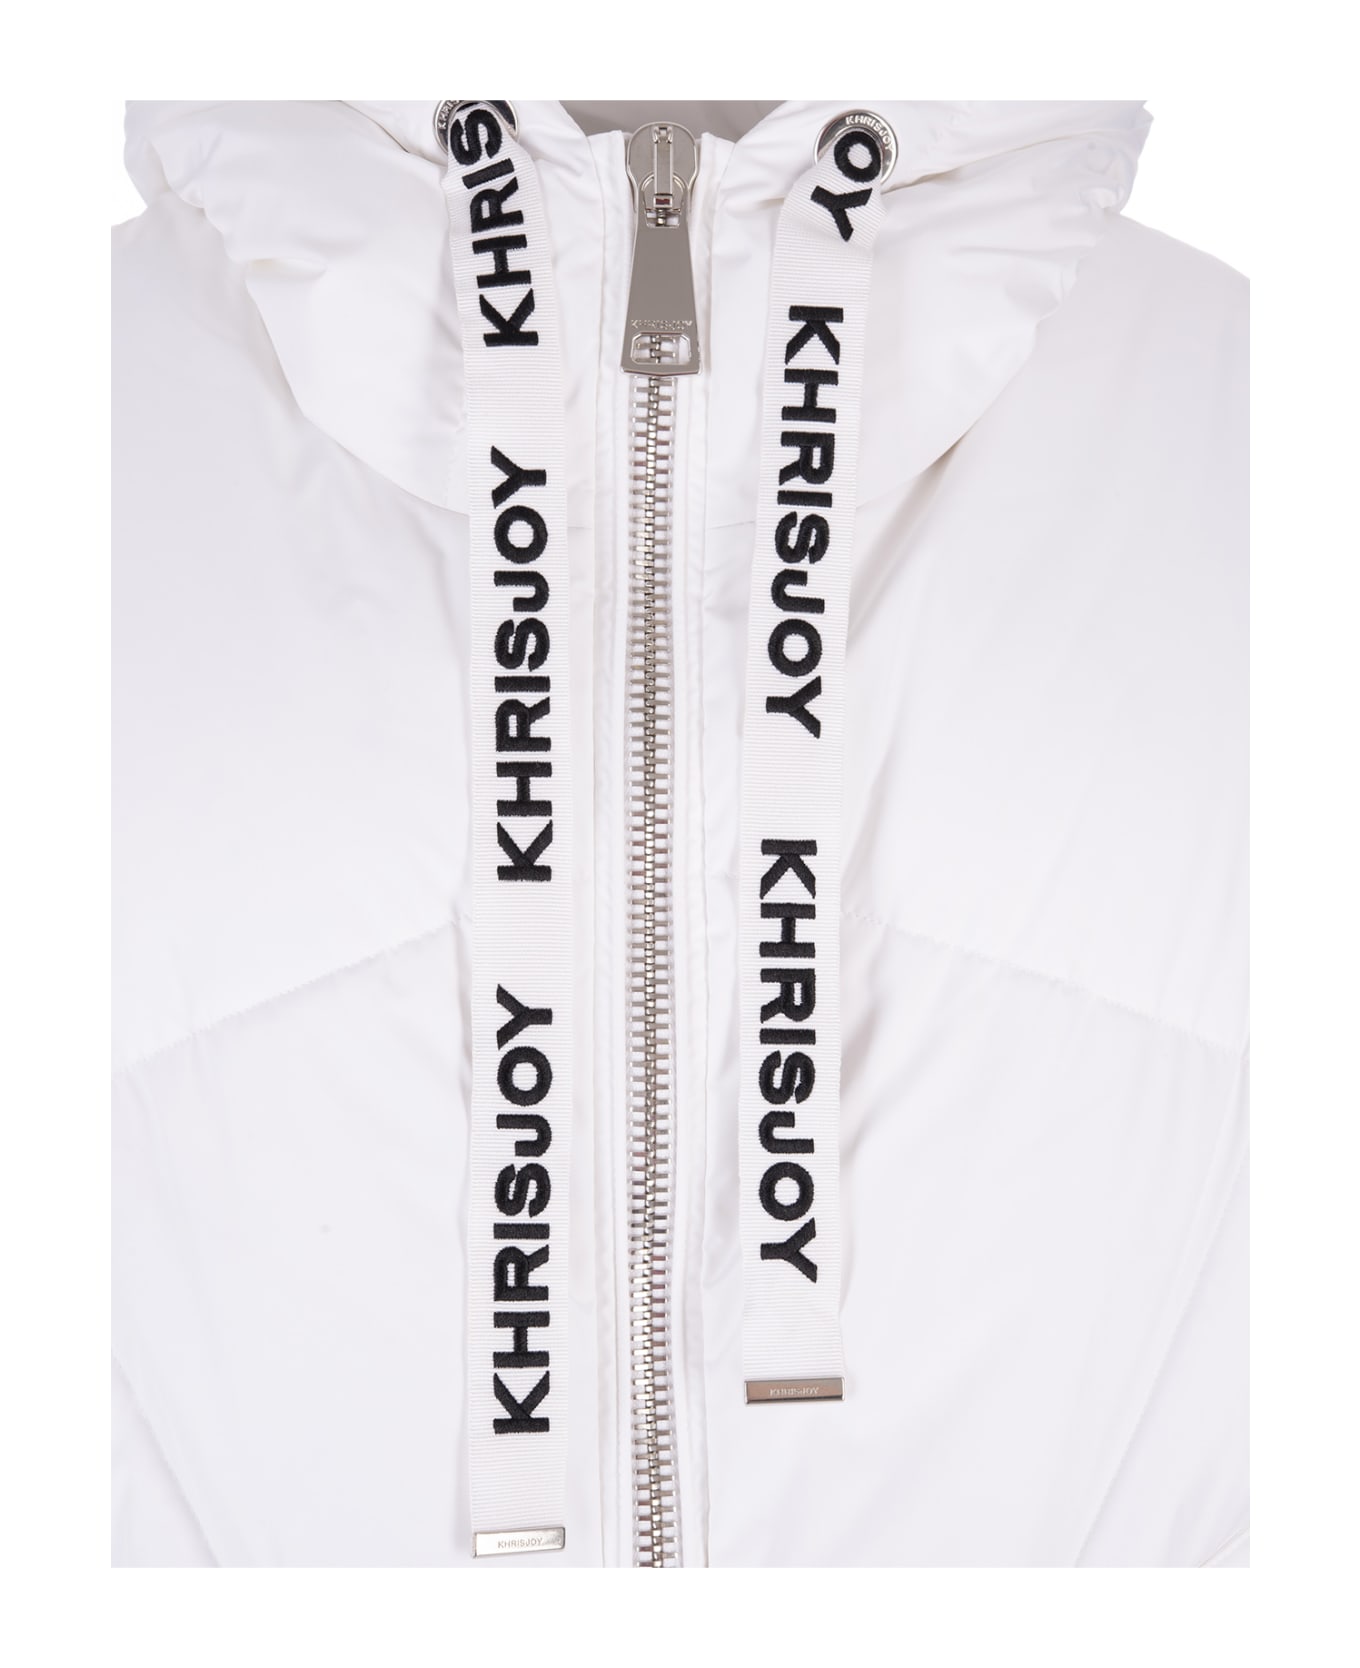 Khrisjoy White Khris Iconic Puffer Jacket - White